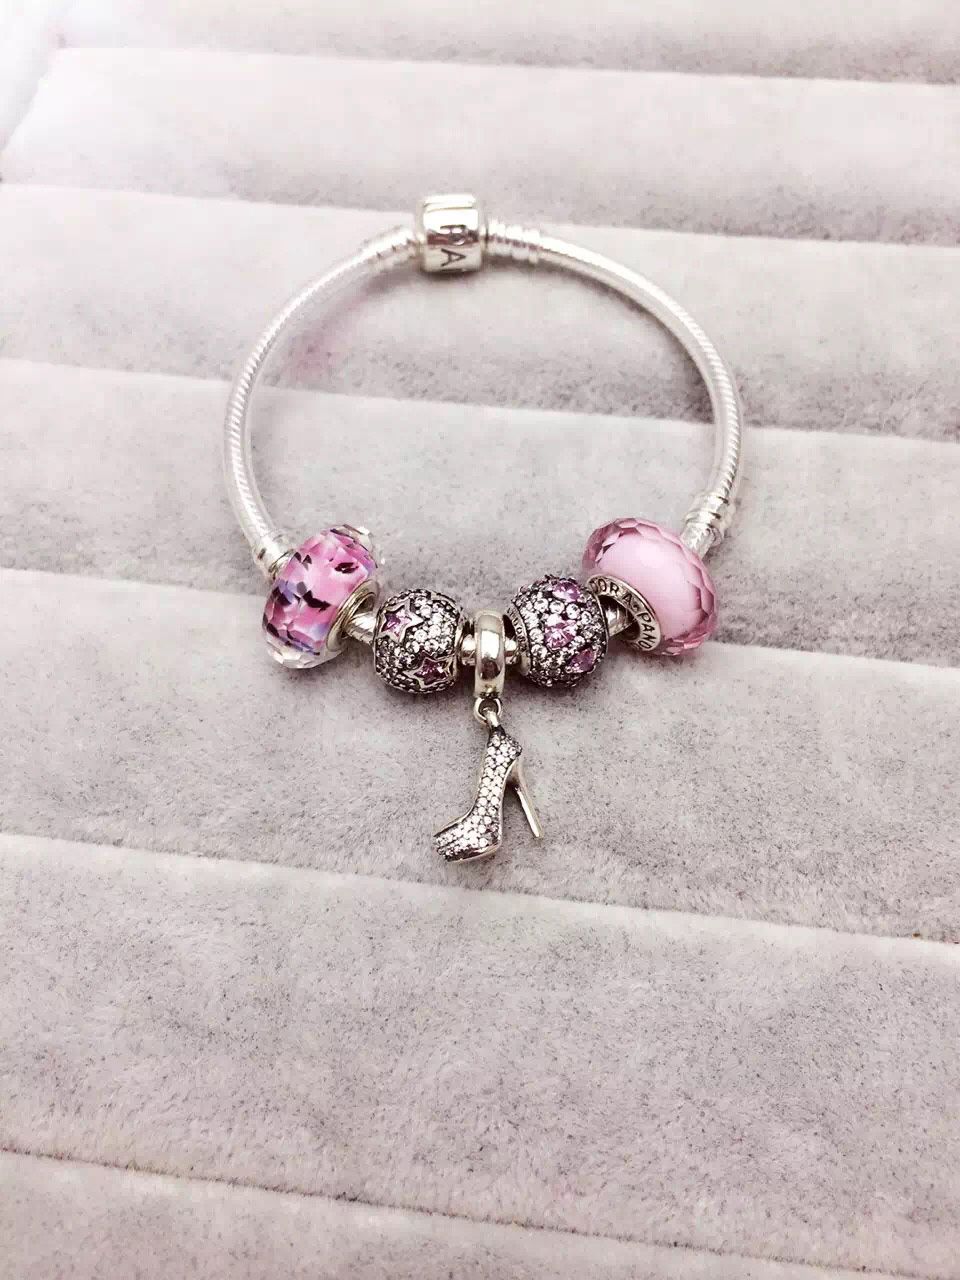 50% OFF!!! $159 Pandora Charm Bracelet Pink. Hot Sale!!! SKU: CB01636 - PANDORA ...